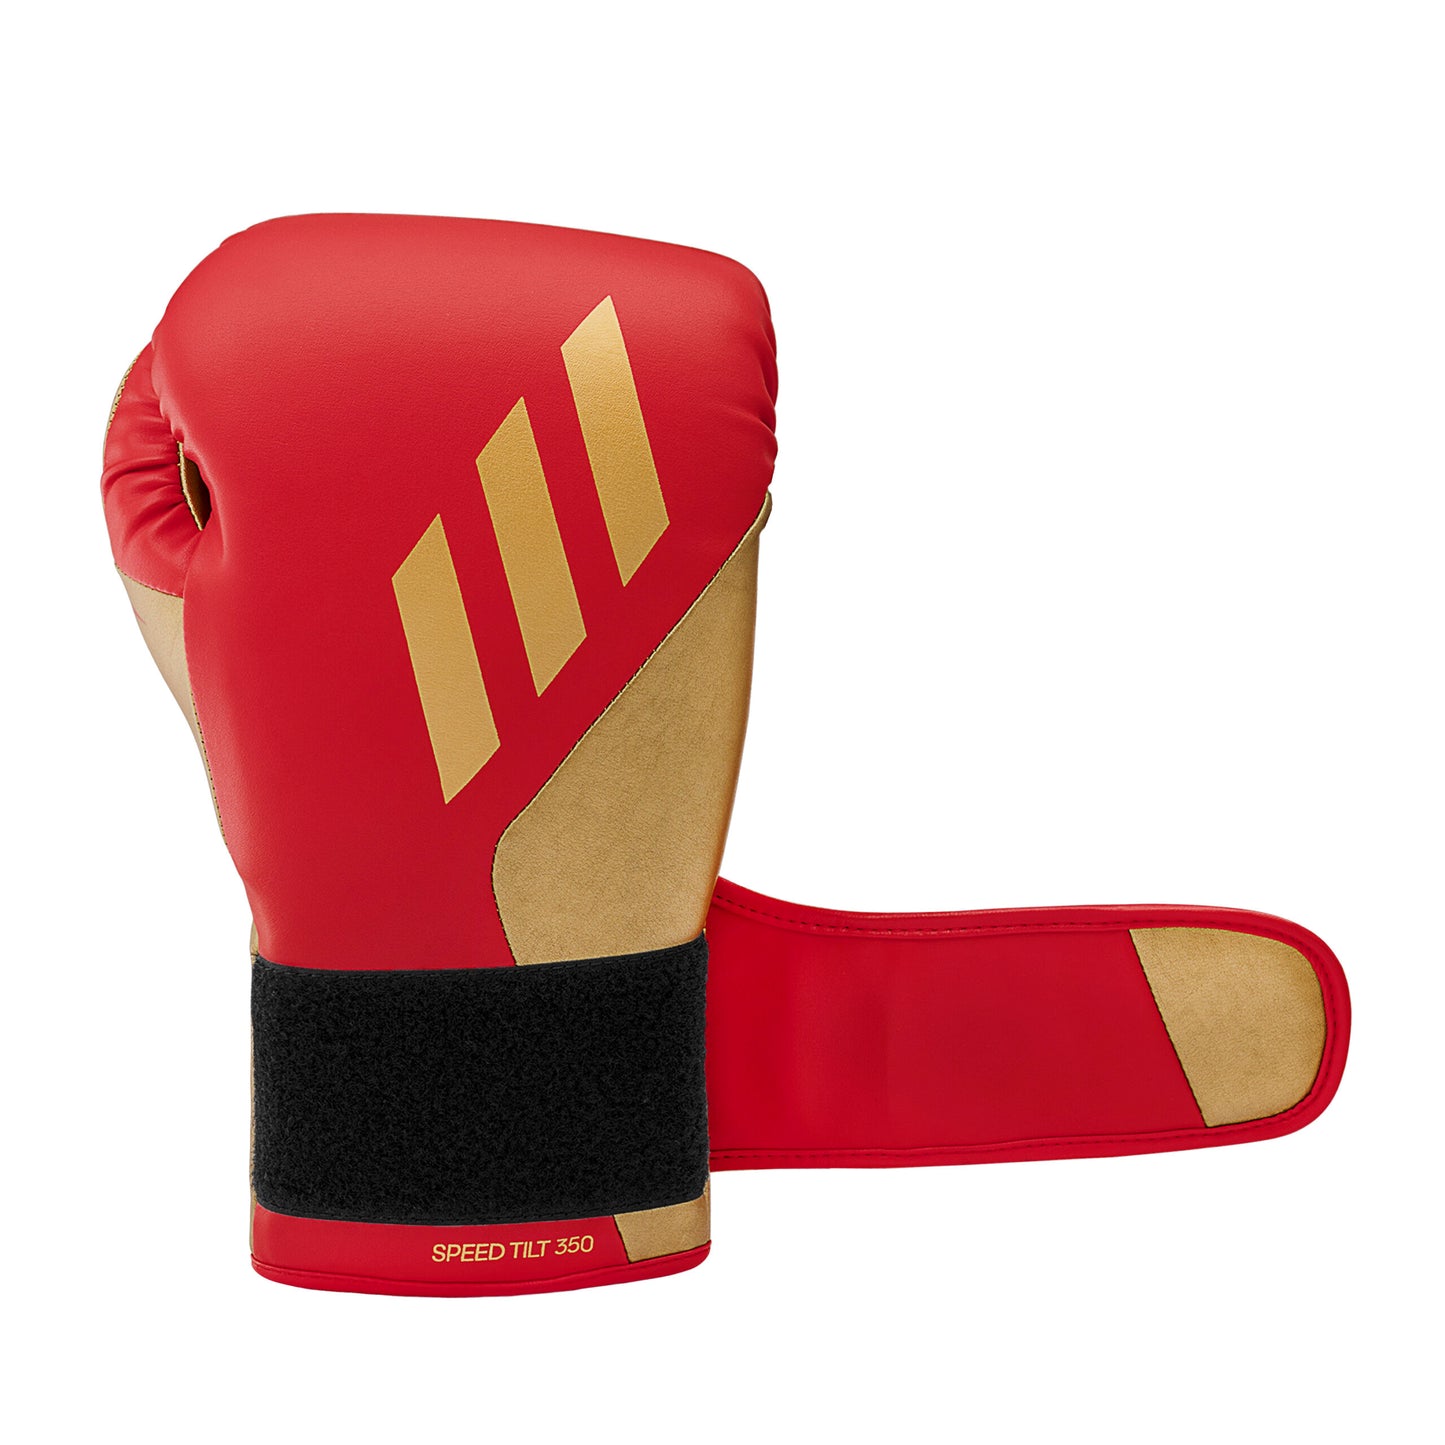 Adispd350tg Adidas Tilt 350 Pro Training Boxing Gloves Velcro Strap Red Gold 07